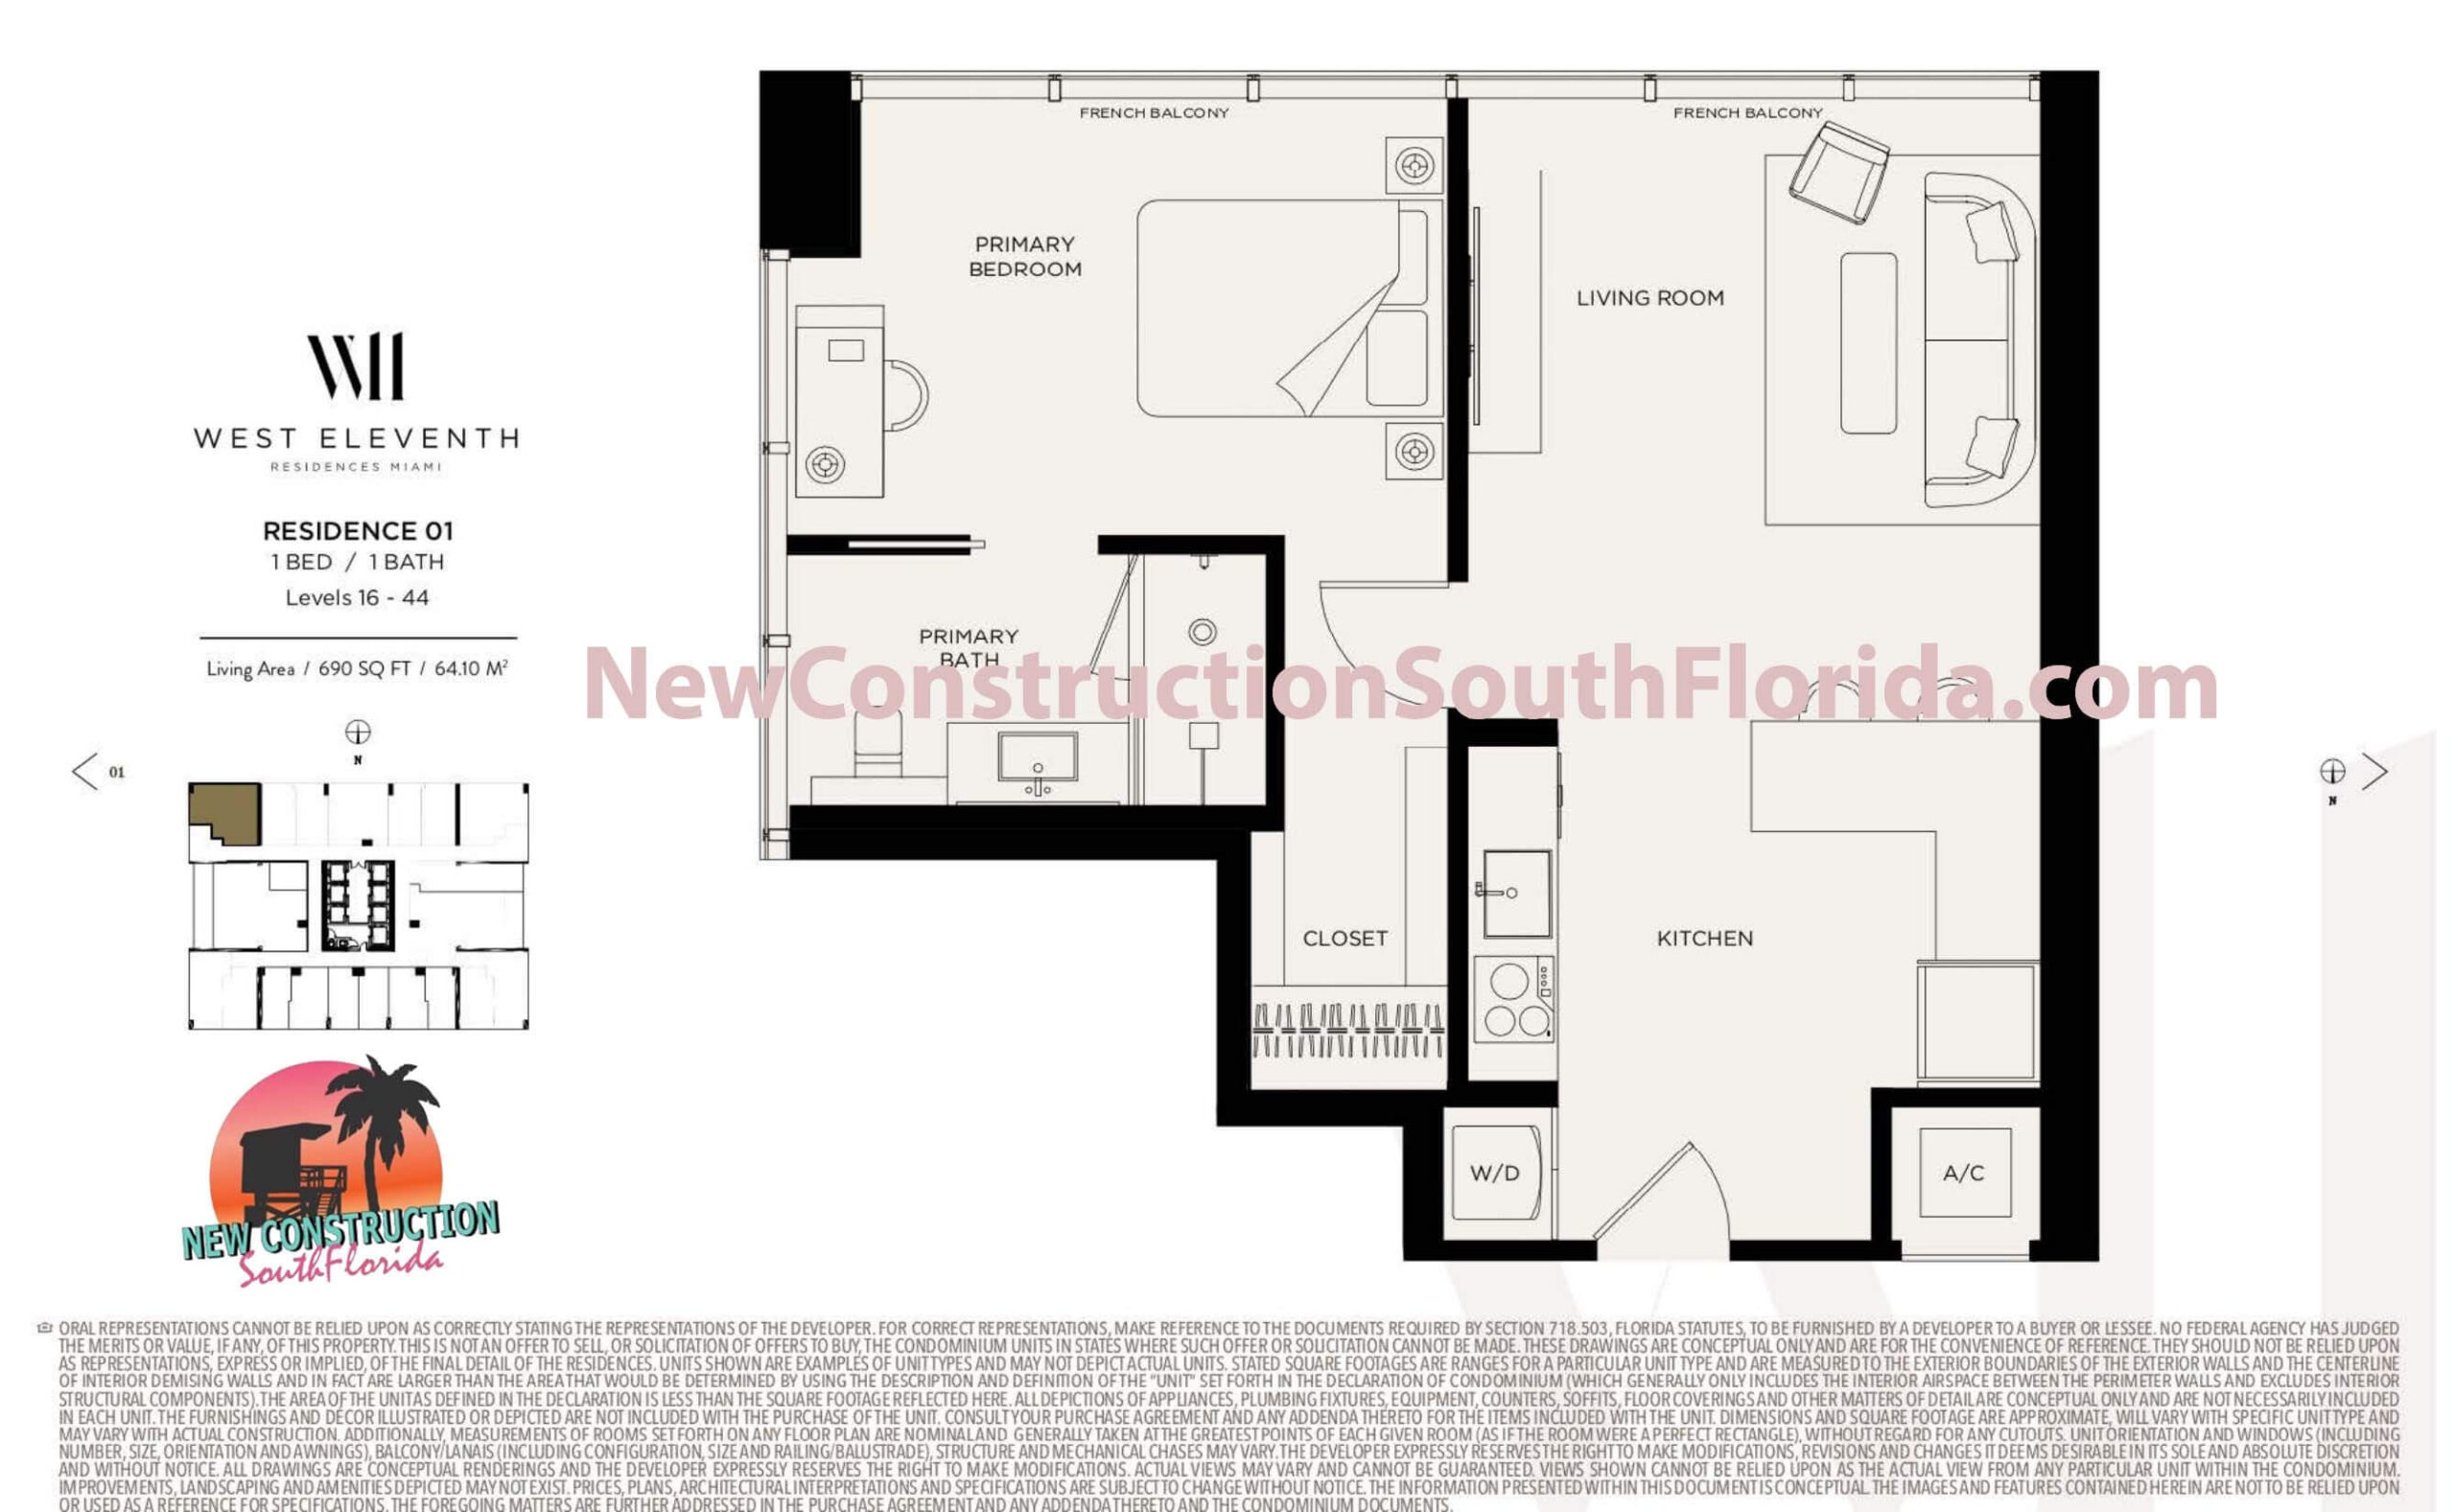 West Eleventh Floor Plan, Residence 01, Level 16-44